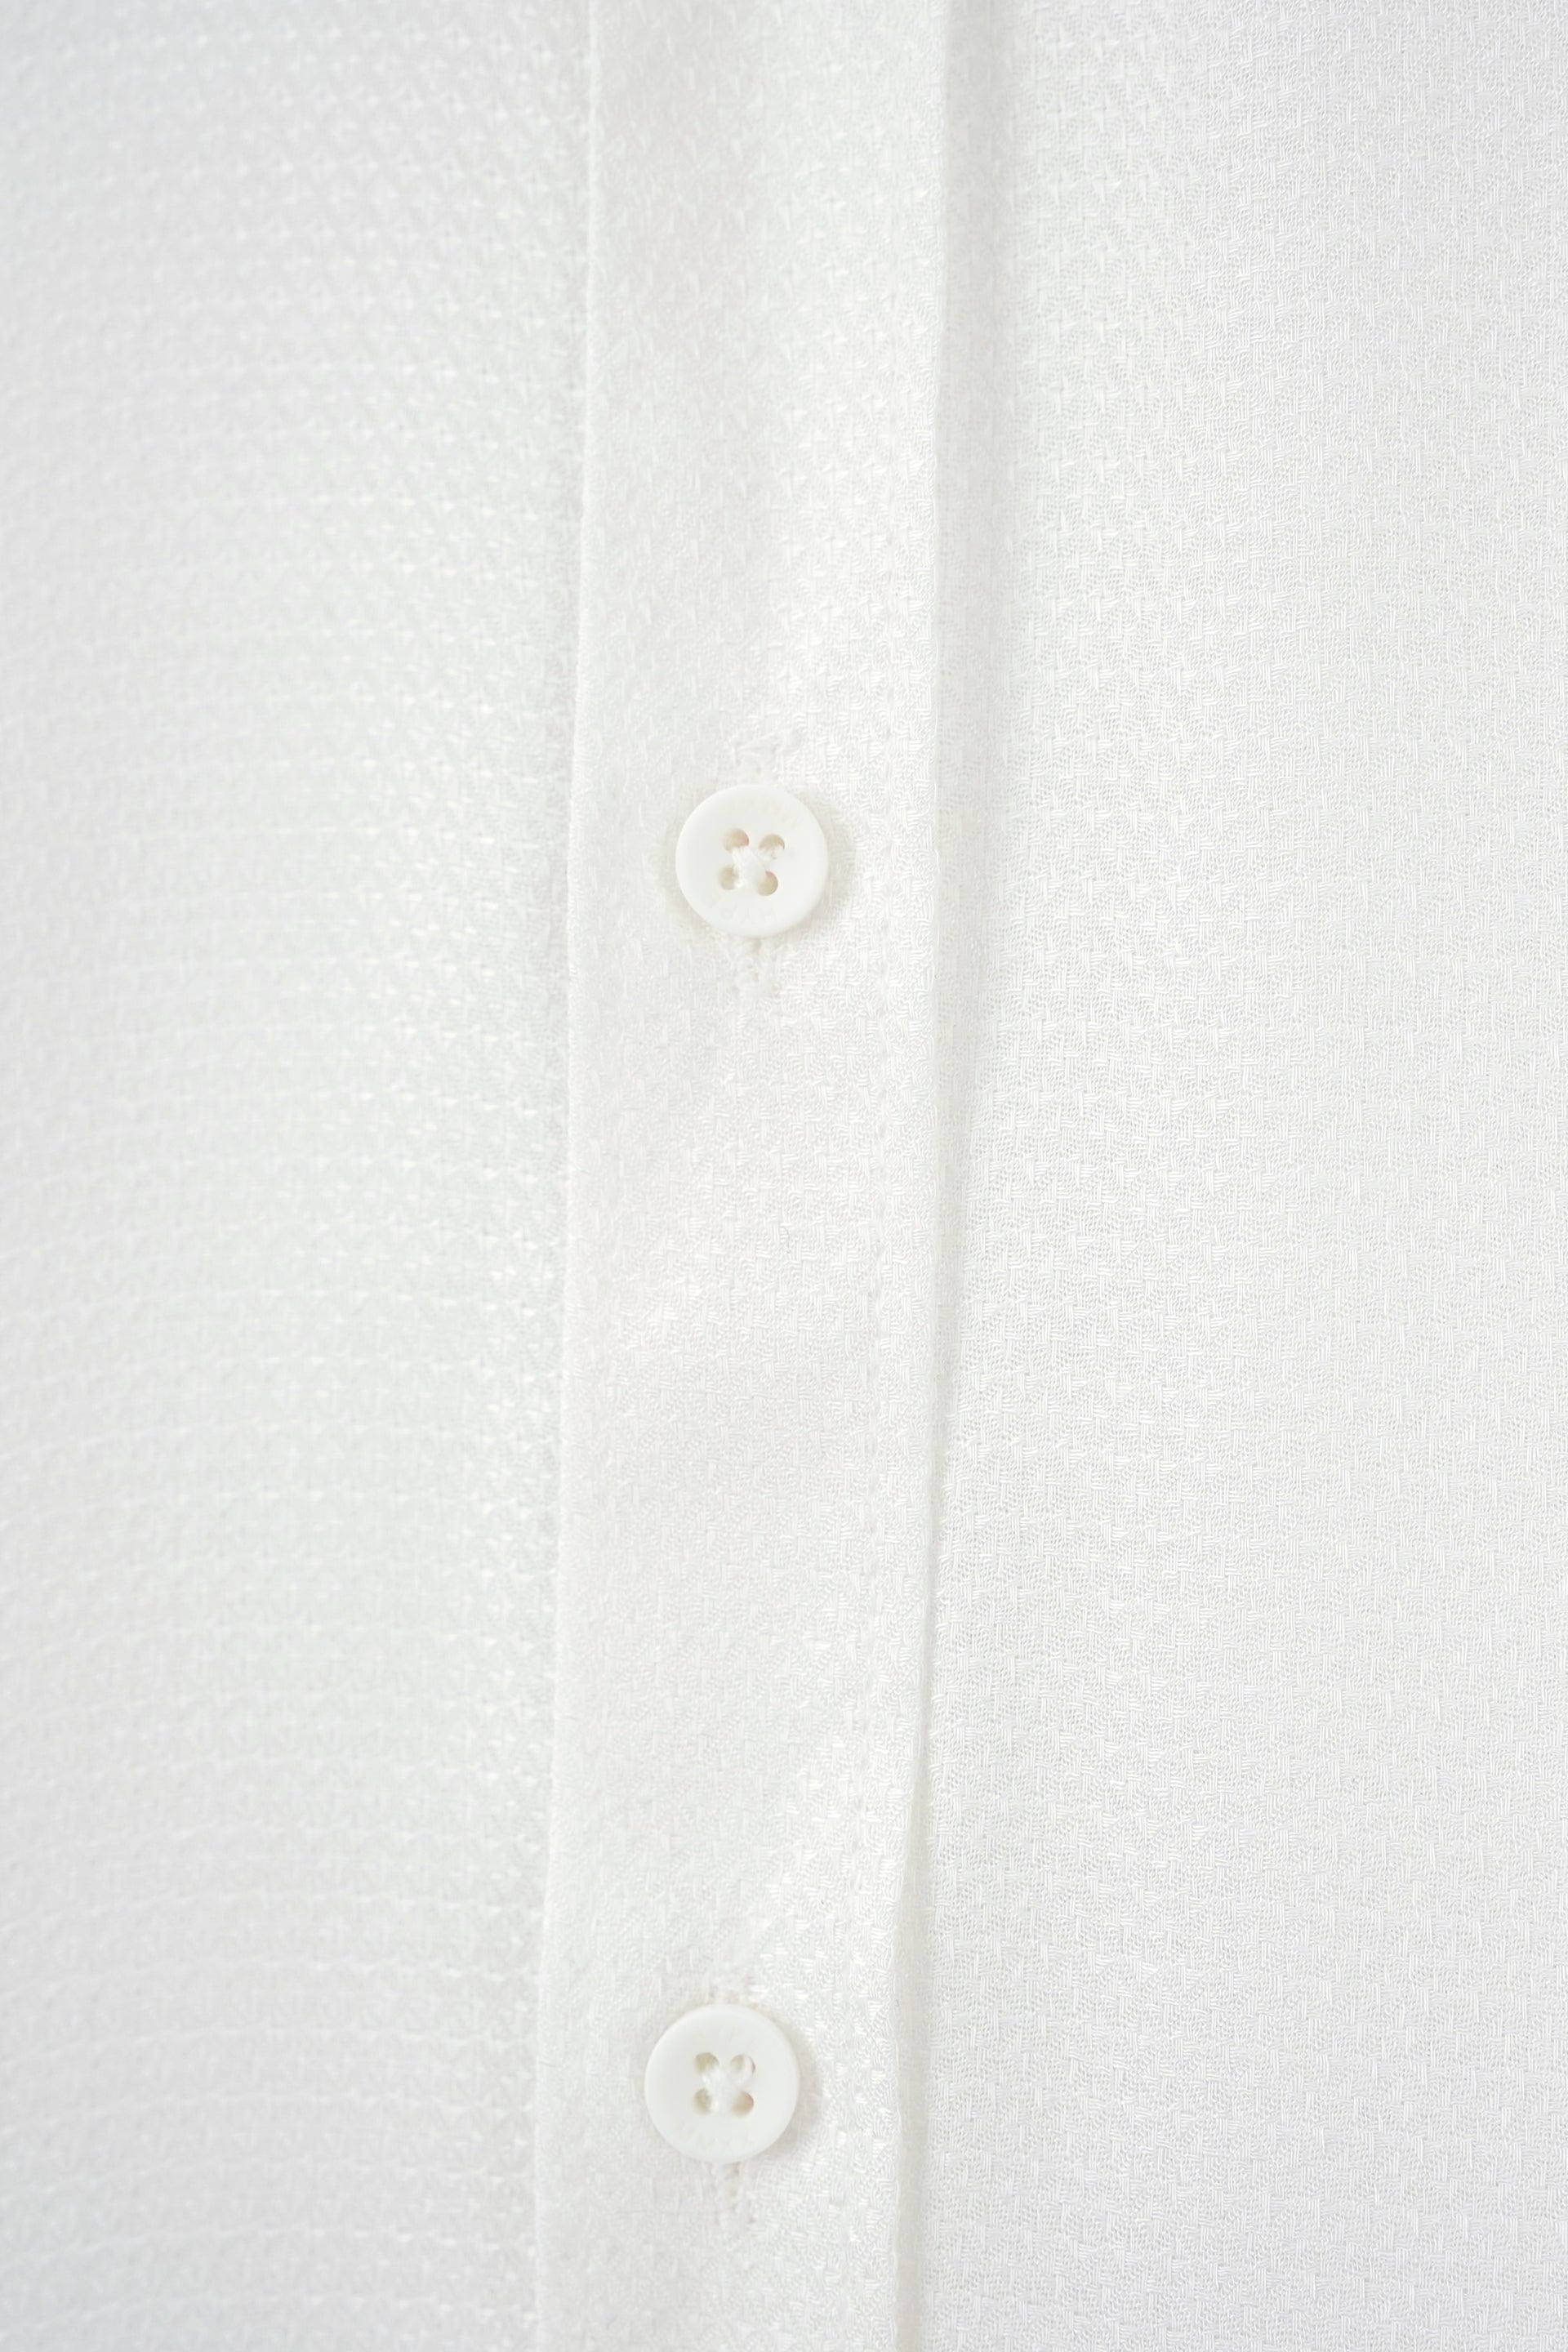 White Casual Shirt 002381